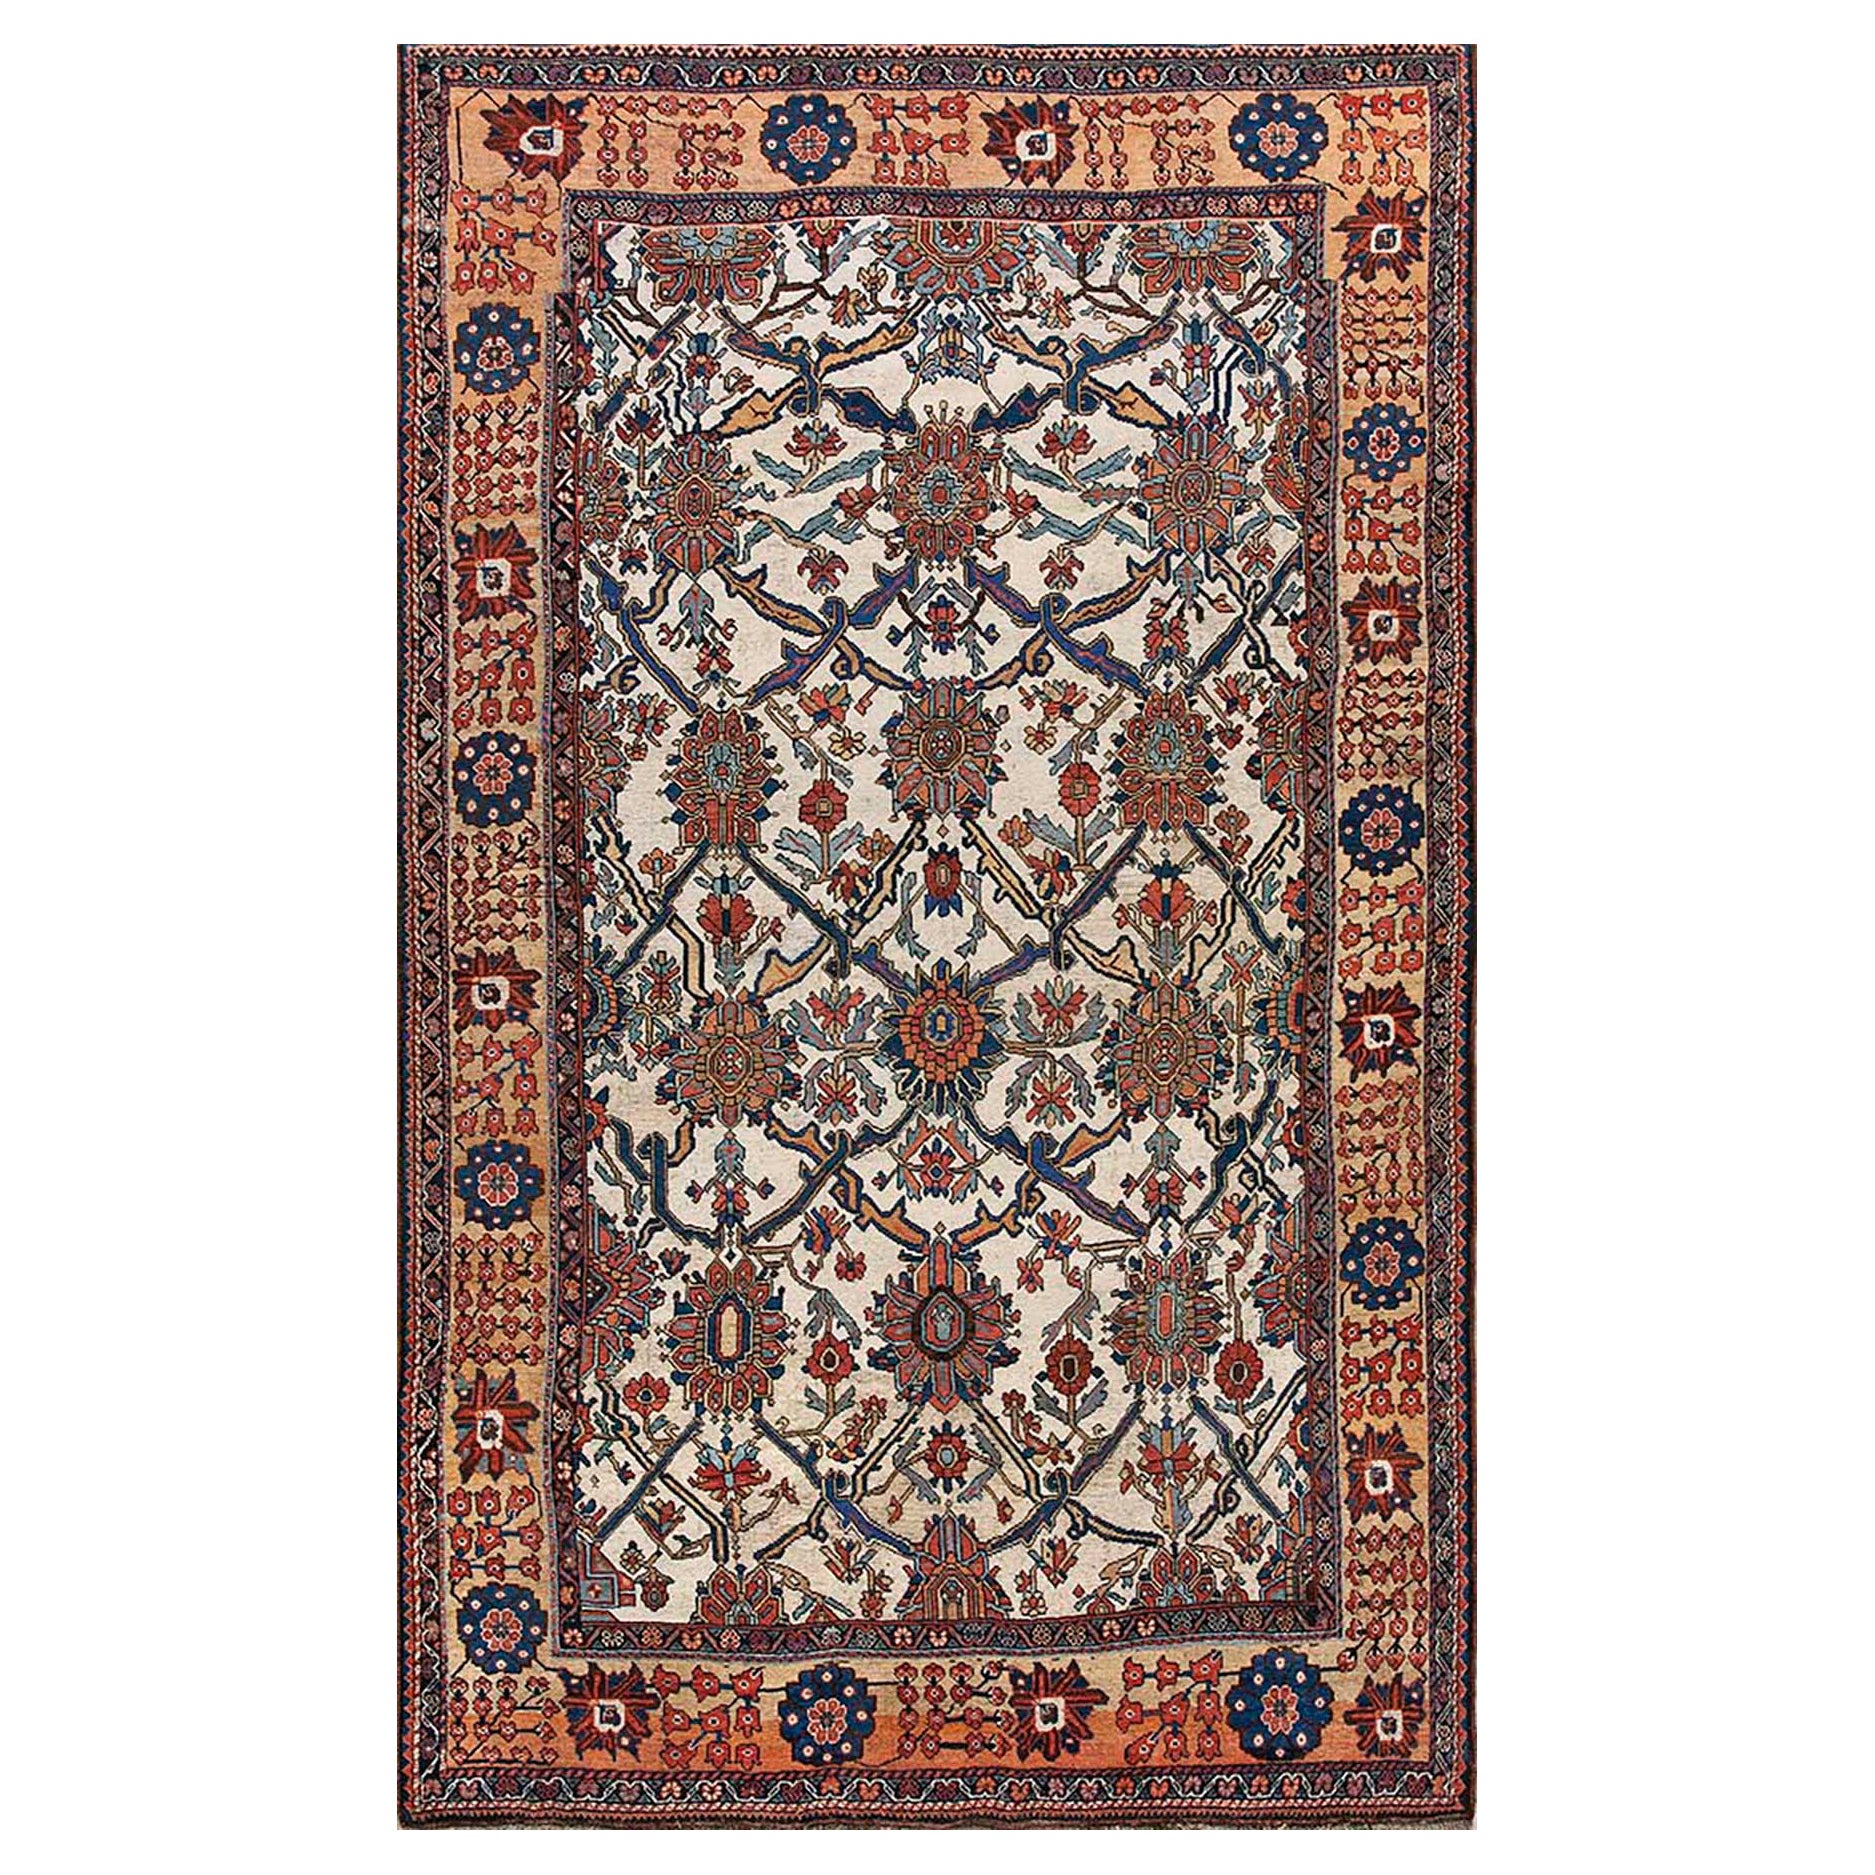 19th Century S. Persian, Fars region Bakhtiari carpet with design inspiration 